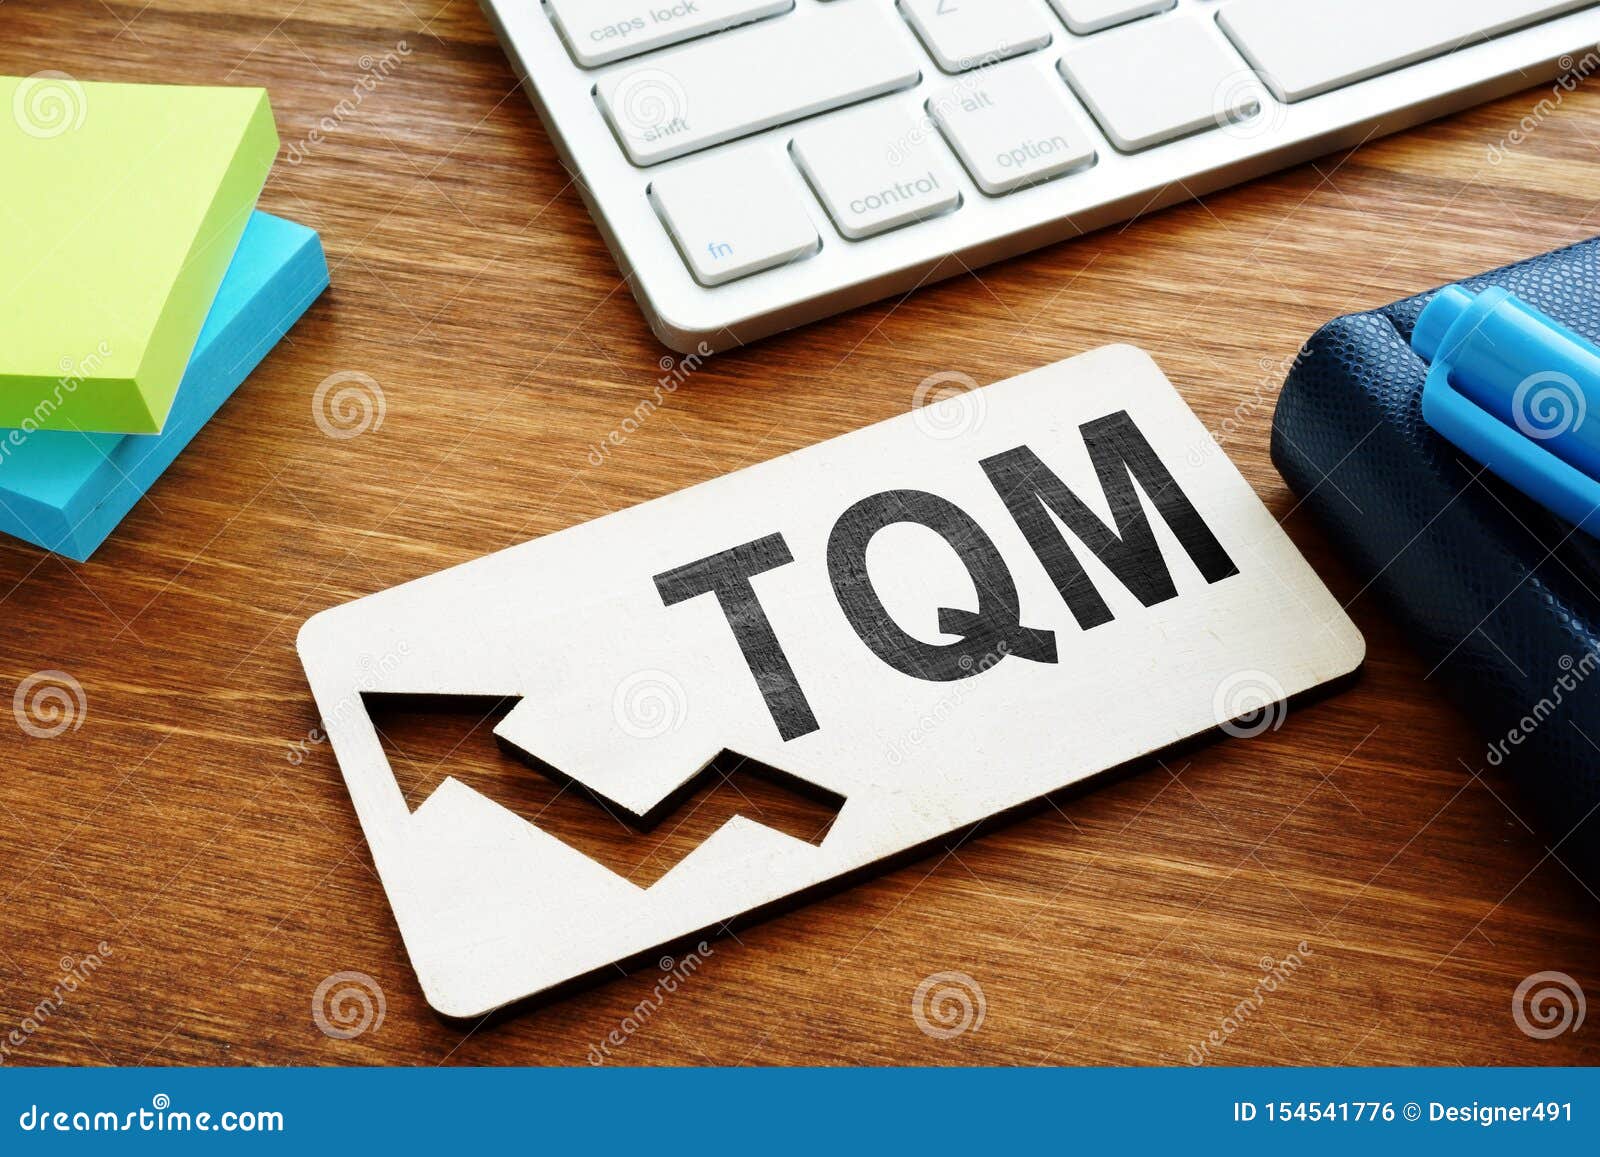 total quality management tqm concept. report on a desk